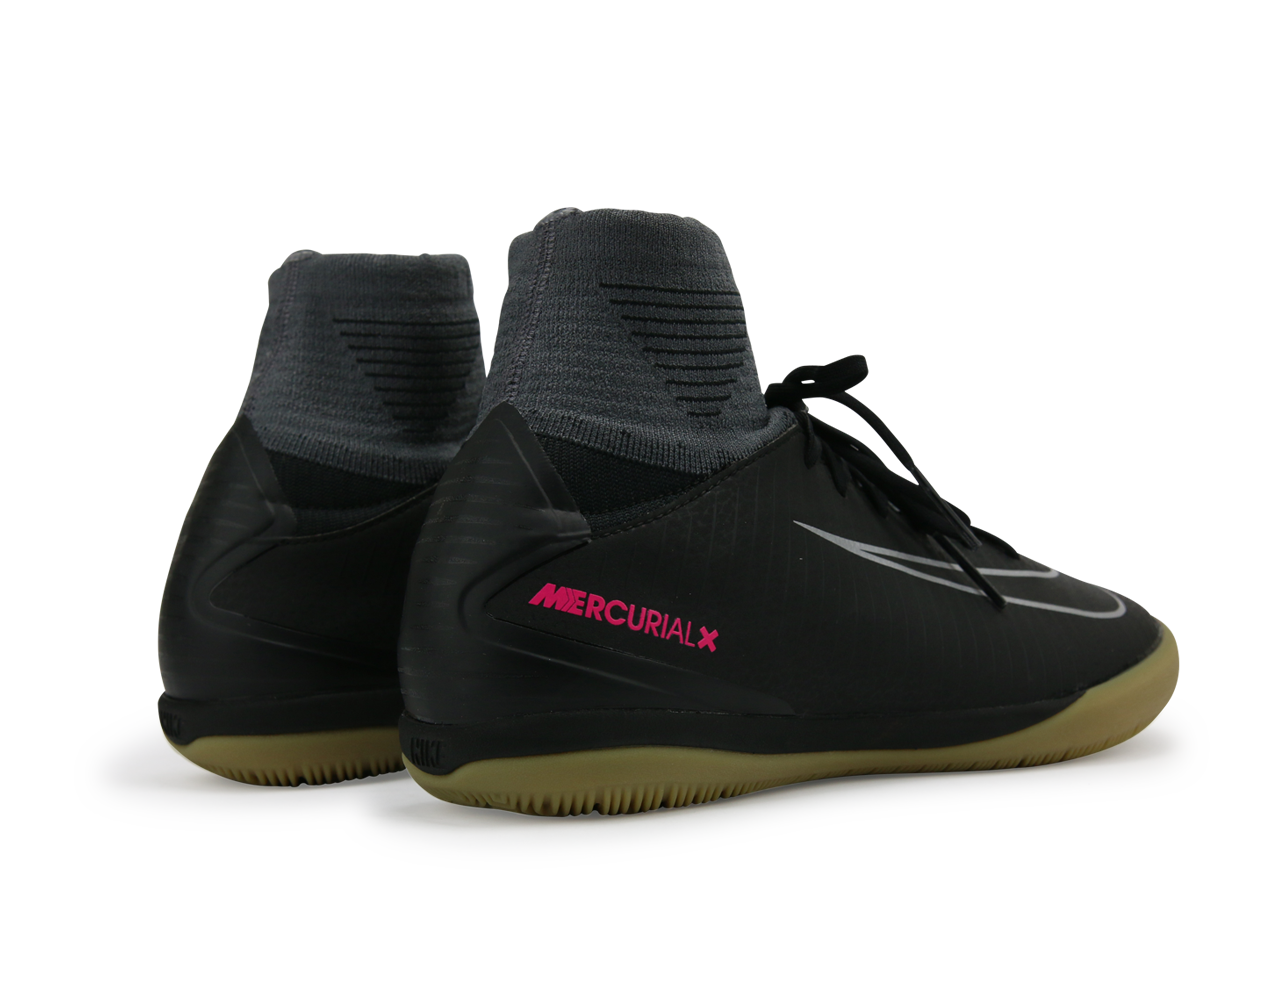 Nike Kids MercurialX Proximo II Indoor Soccer Shoes